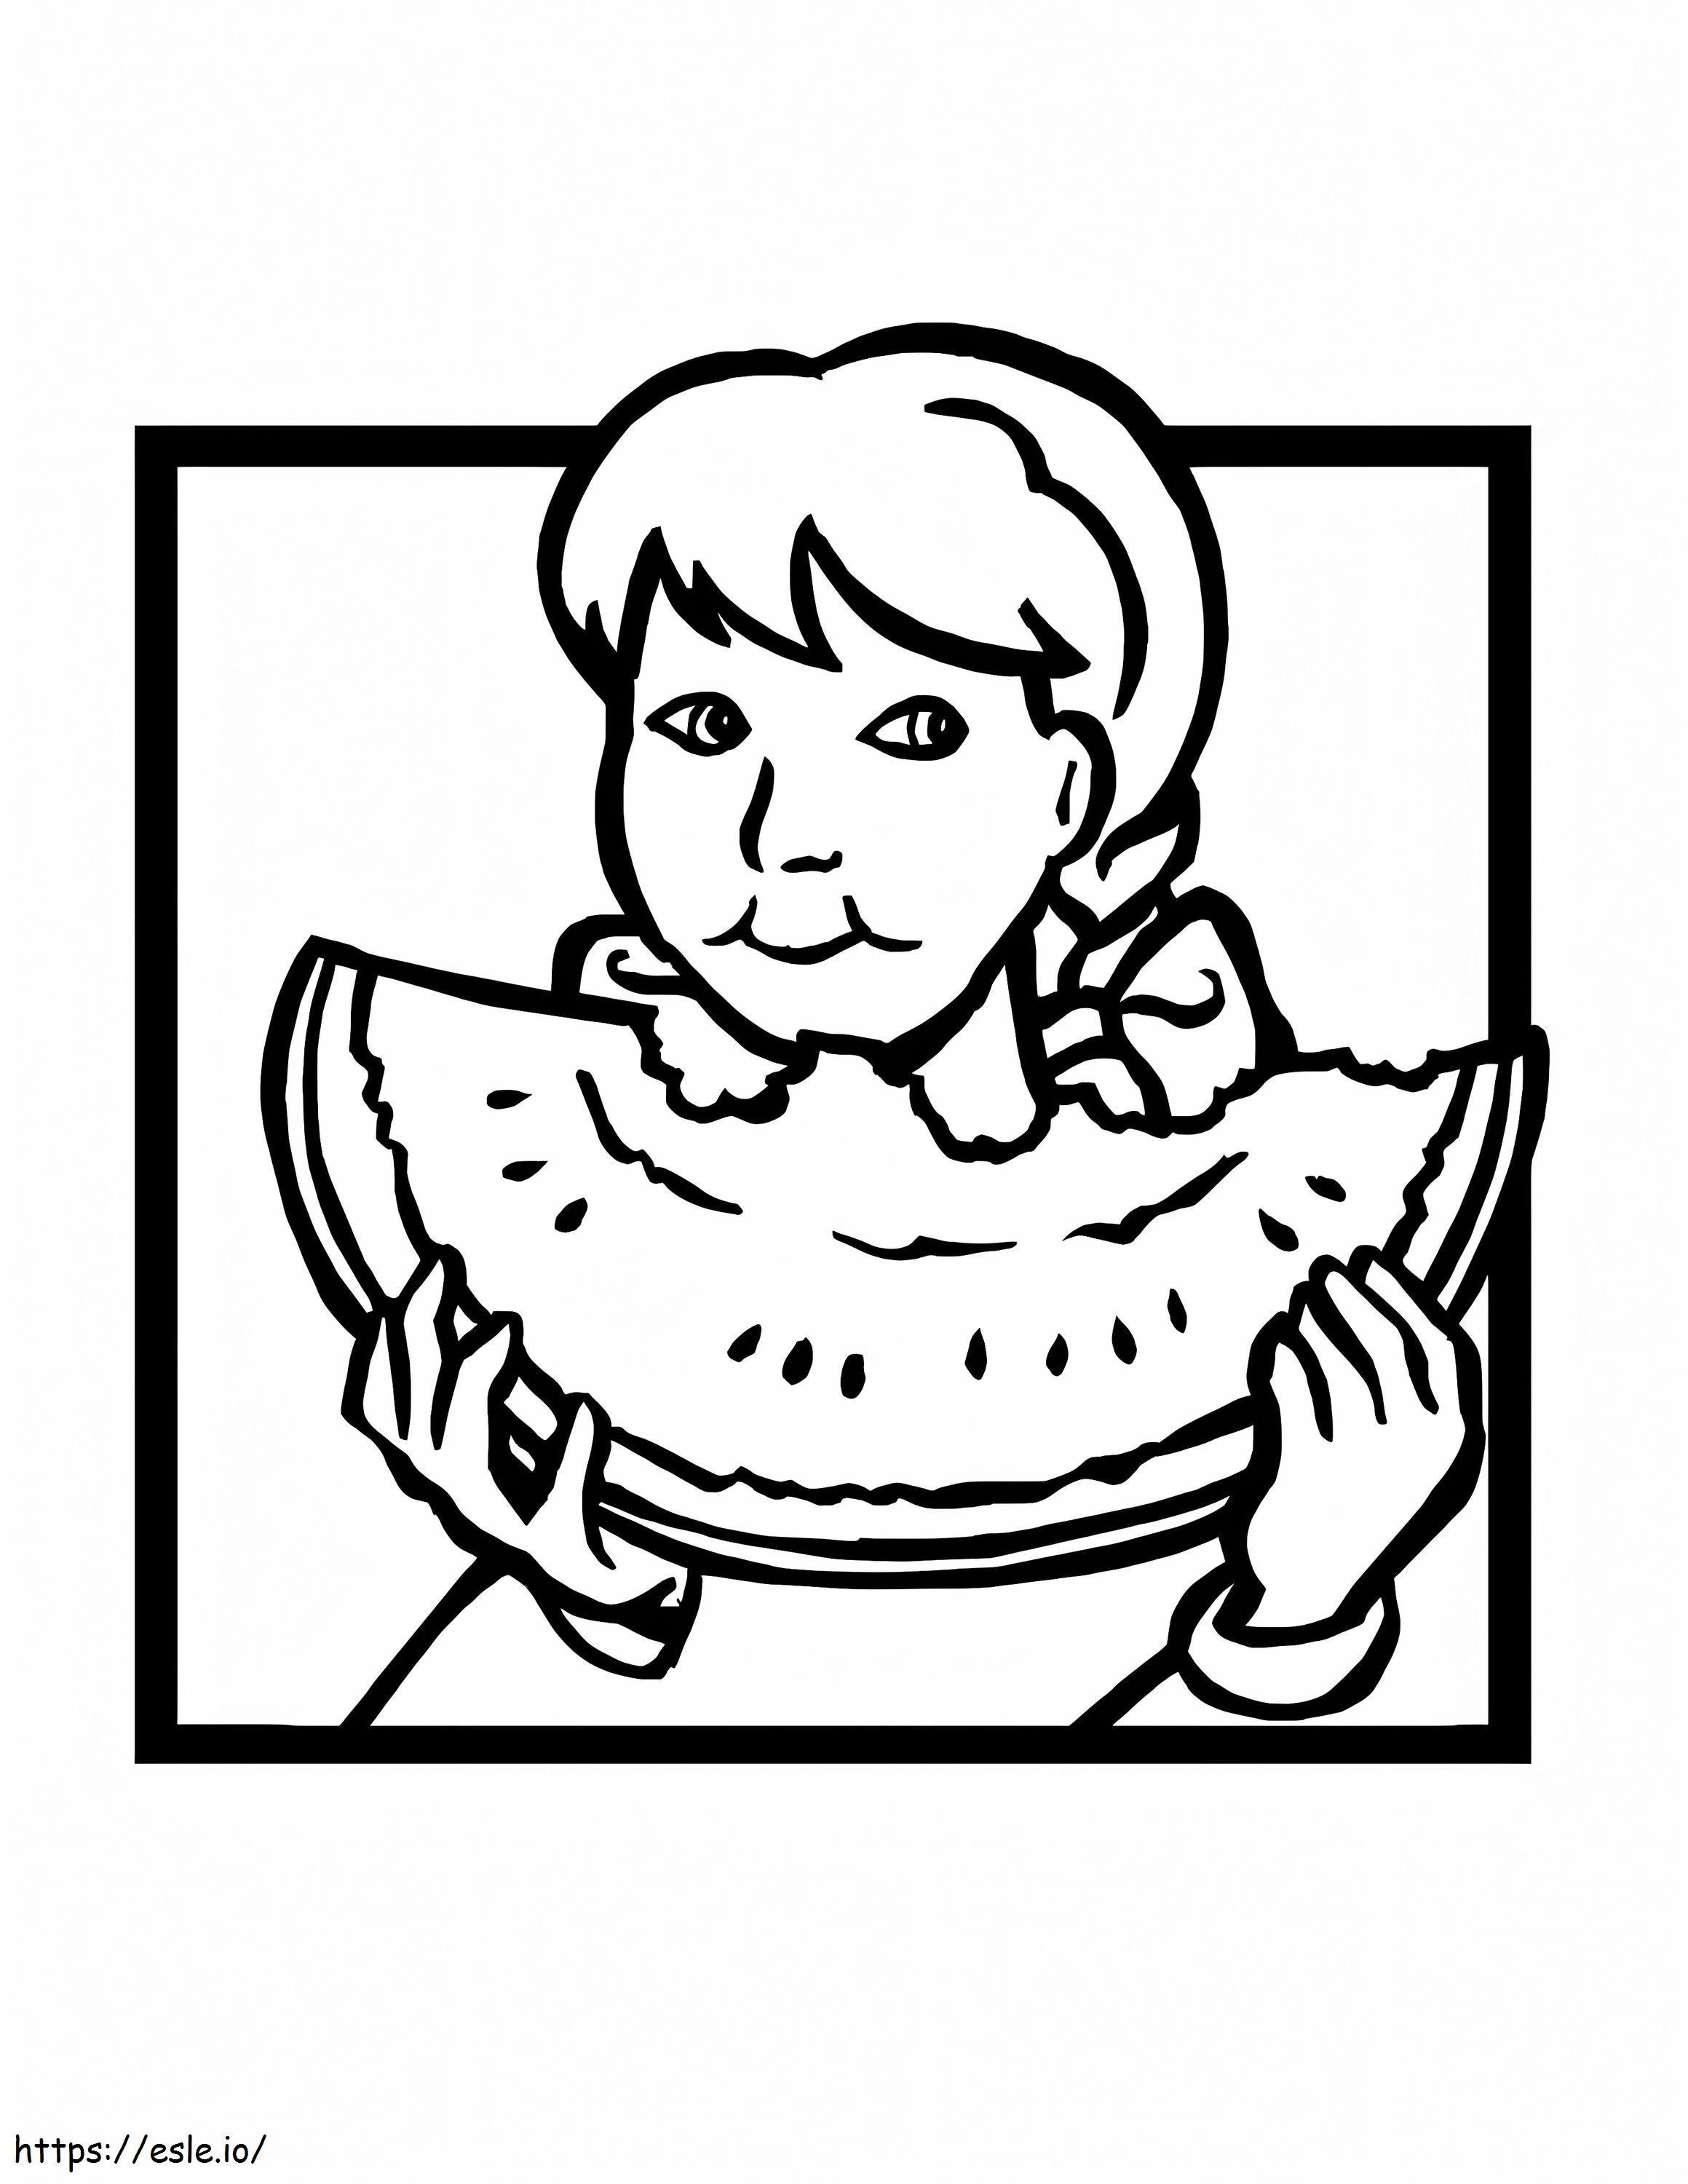 Meisje dat Watermeloen eet kleurplaat kleurplaat